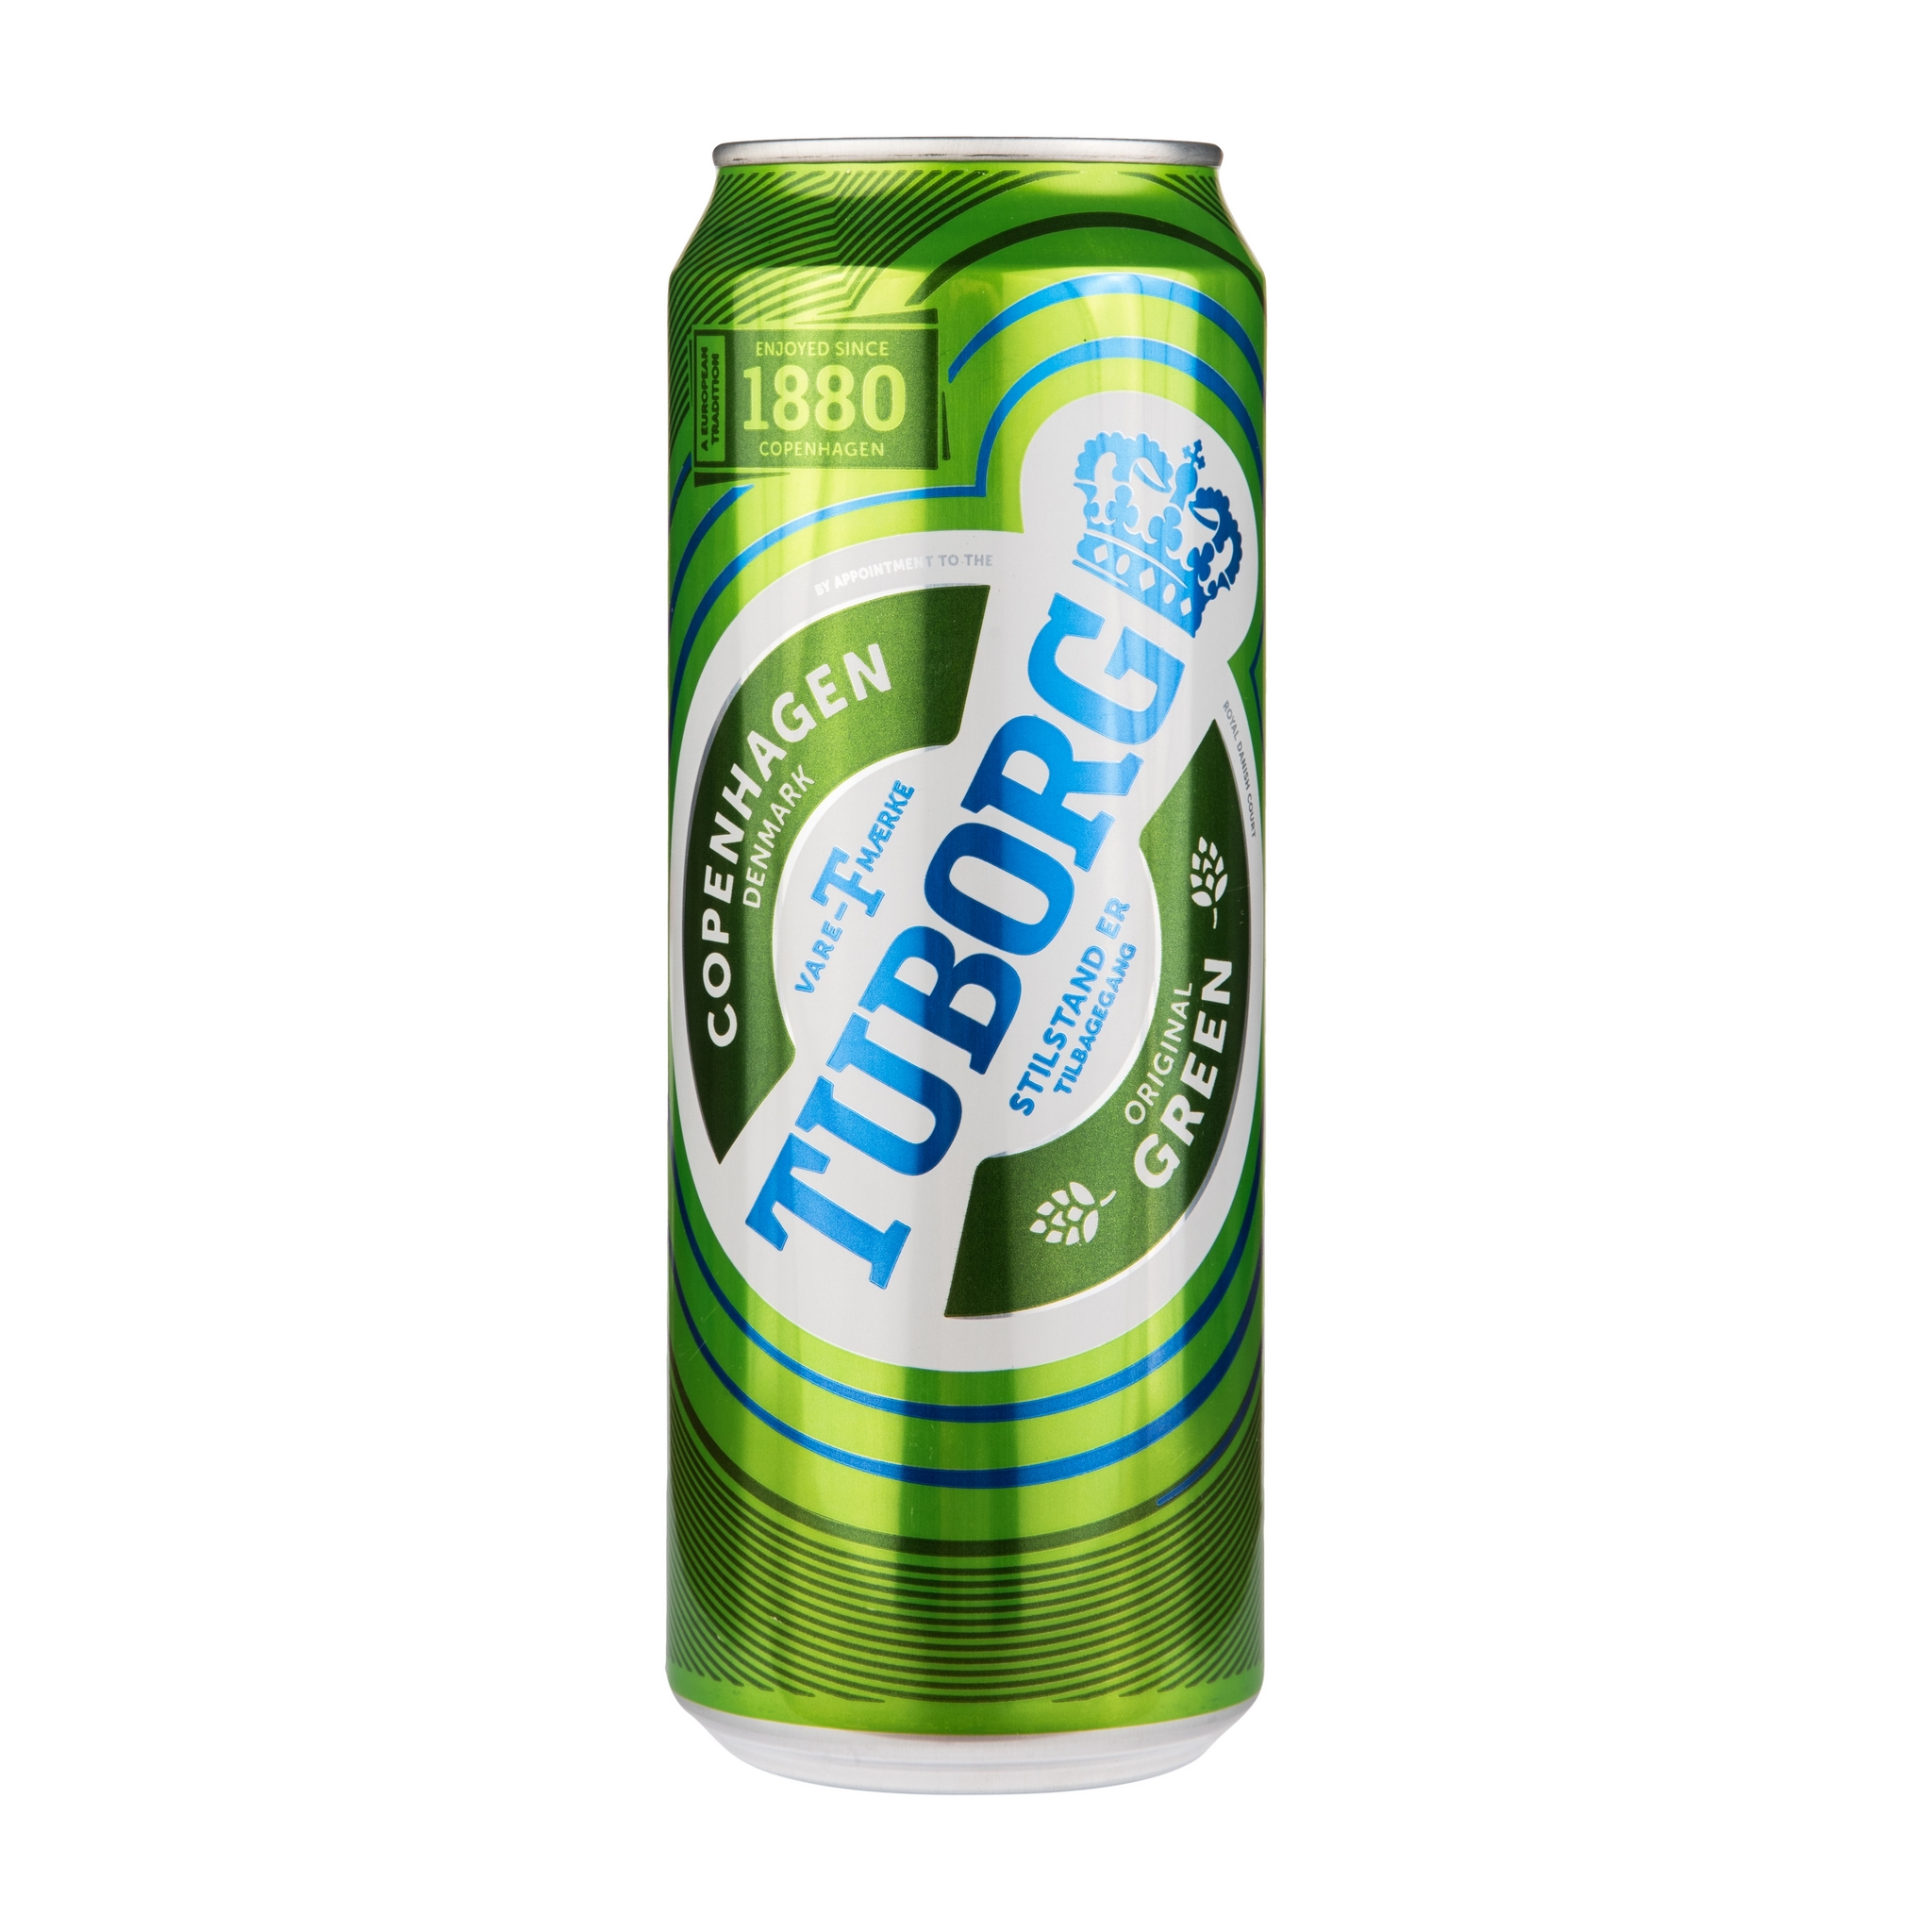 Пиво Tuborg green | Исследование товара от Роскачества